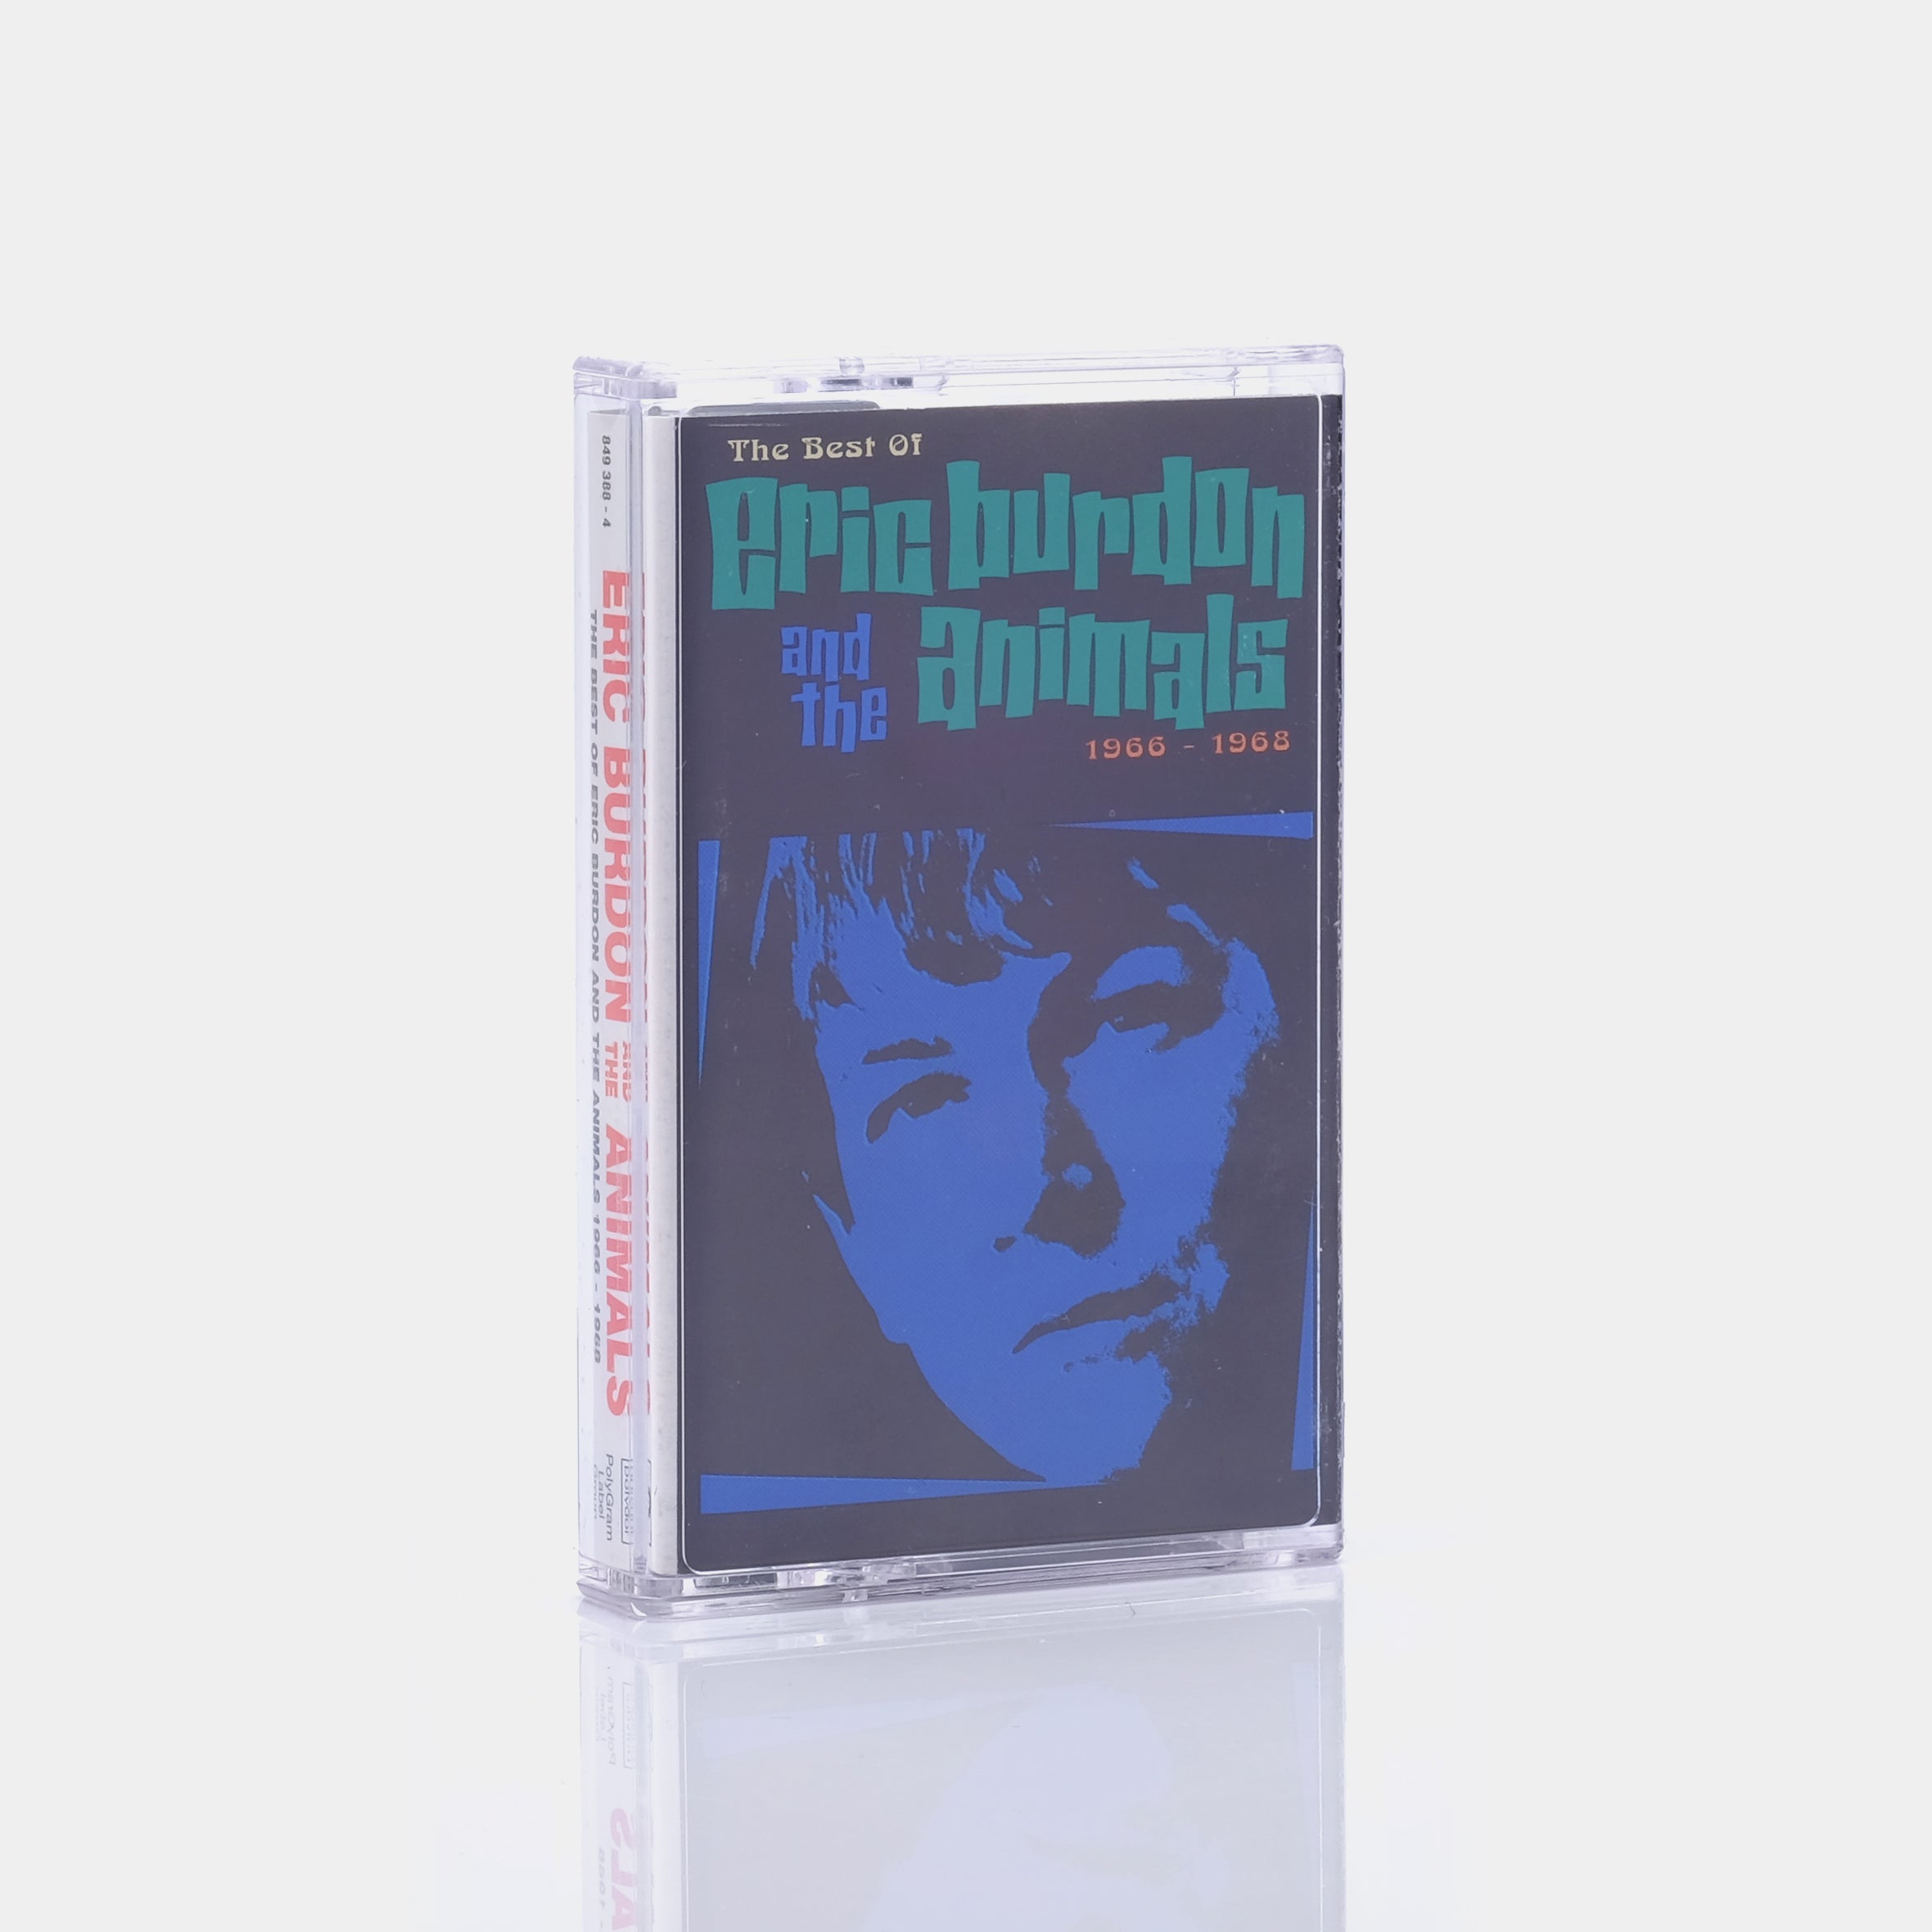 Eric Burdon & The Animals - The Best Of Eric Burdon And The Animals (1966-1968) Cassette Tape